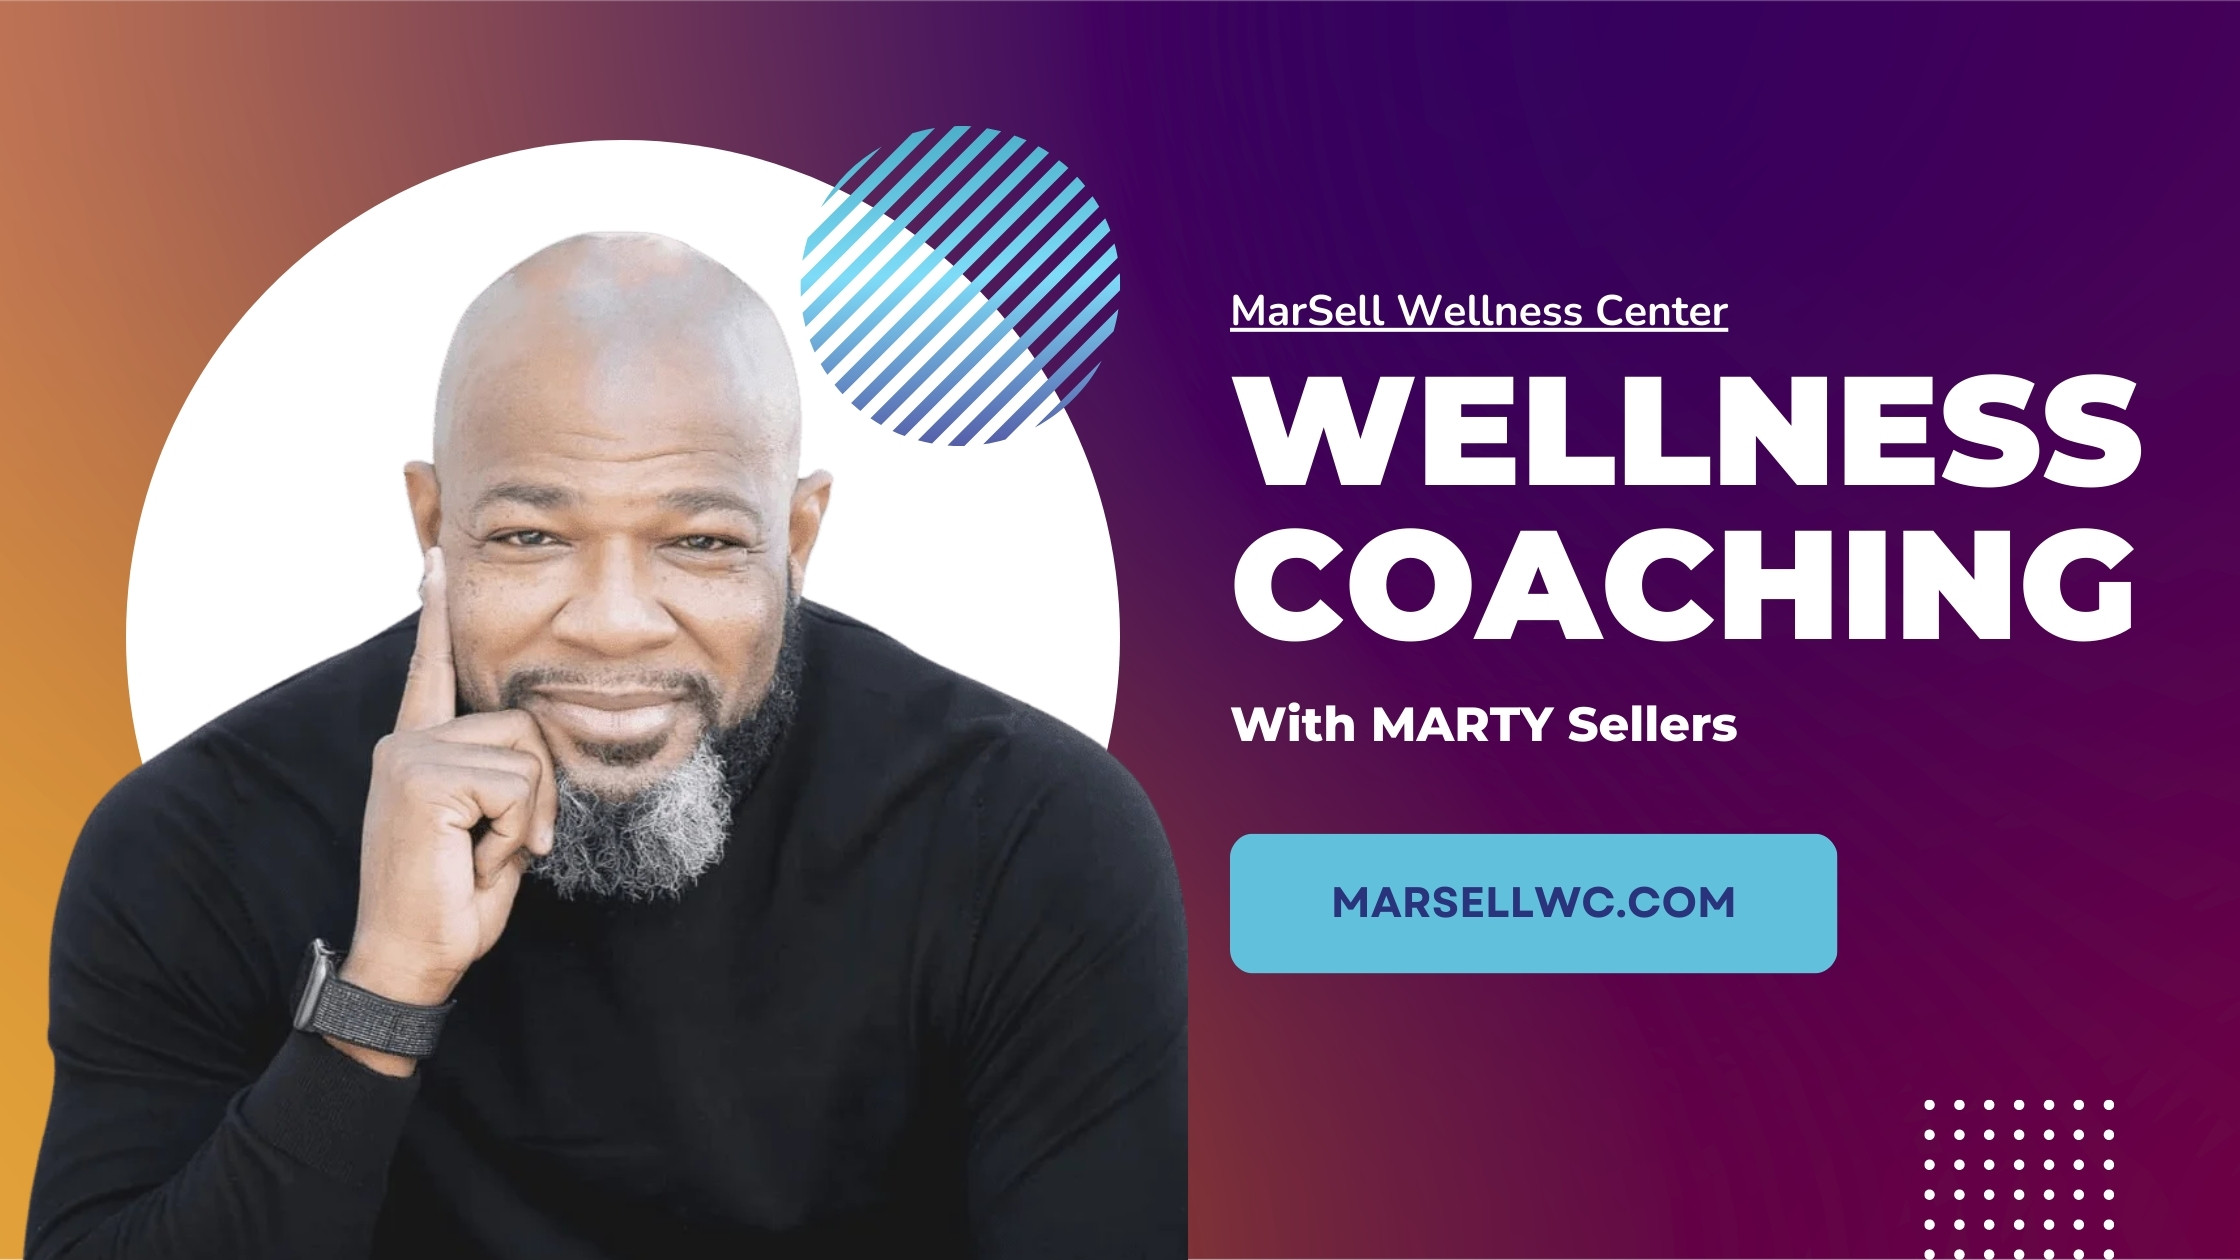 MarSell Wellness Coaching